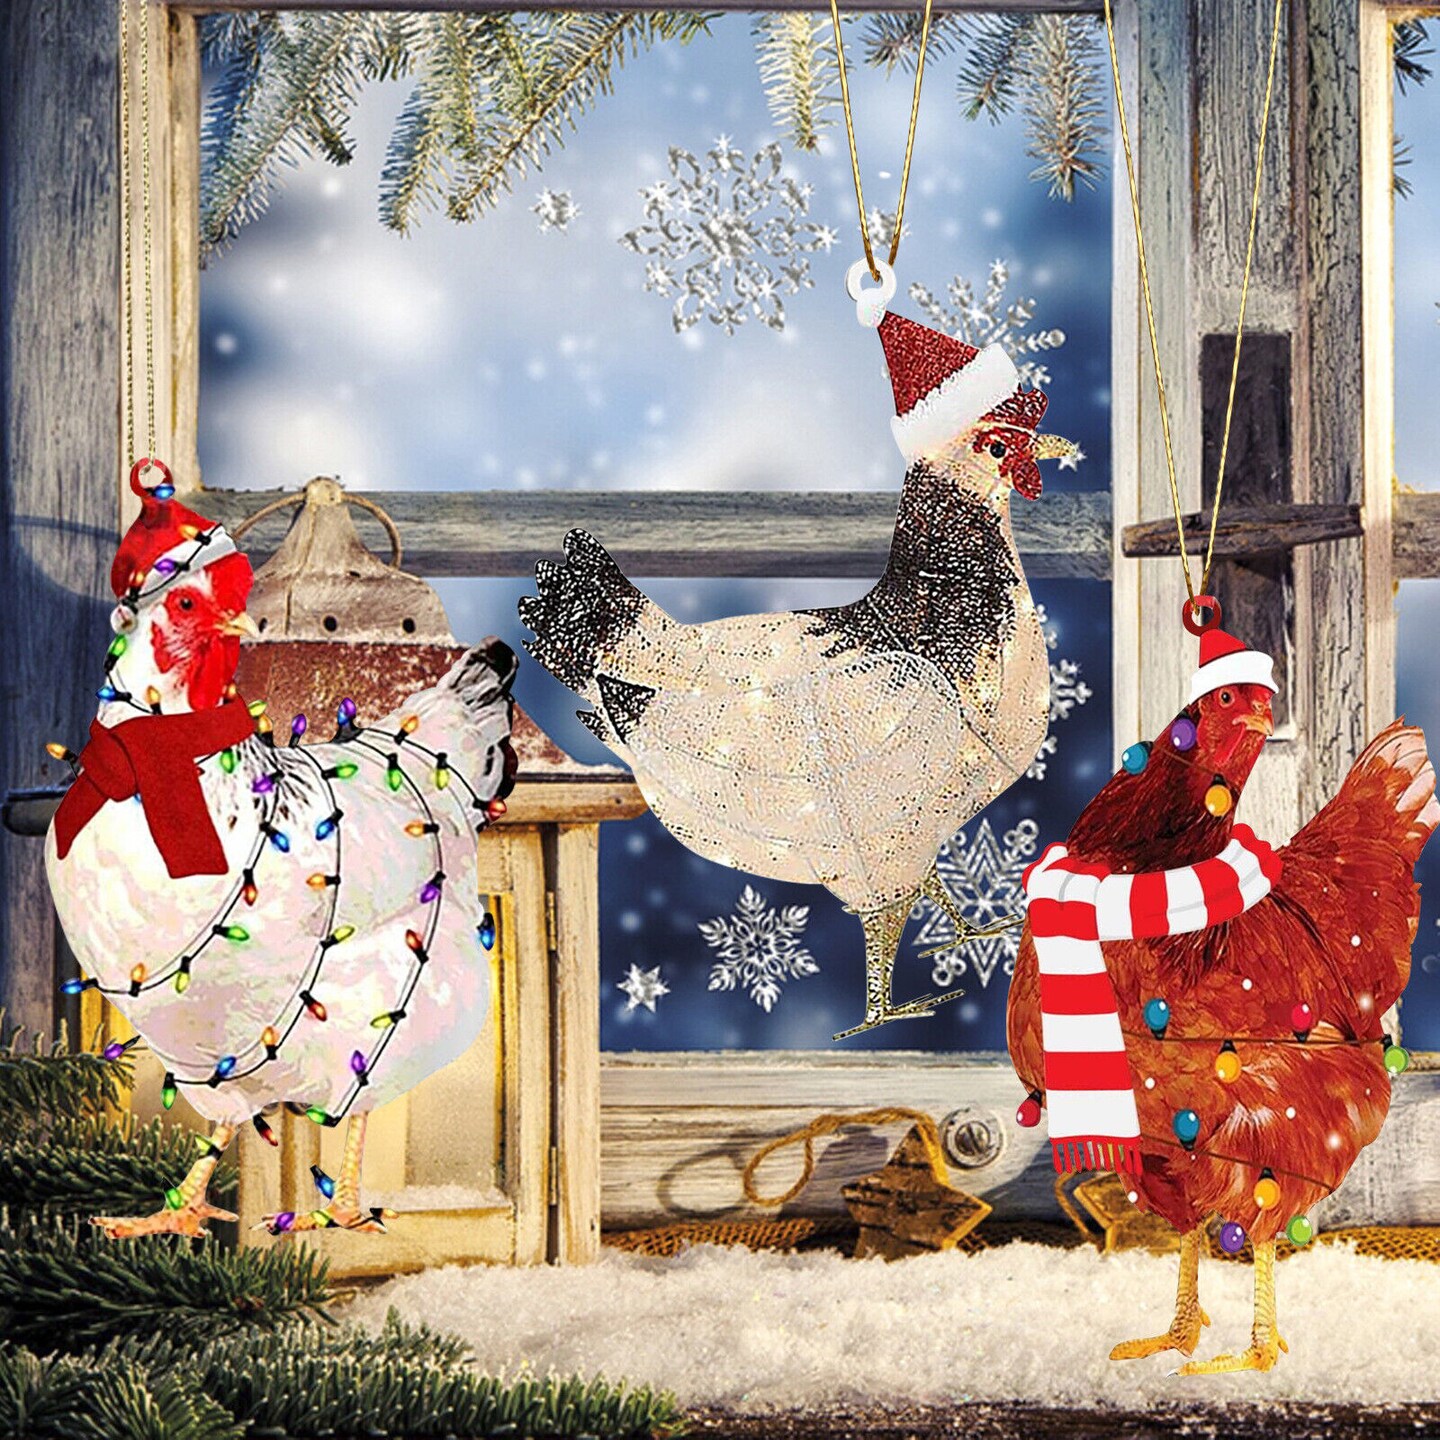 Kitcheniva Acrylic Christmas Chicken Hanging Ornament 4 Pcs